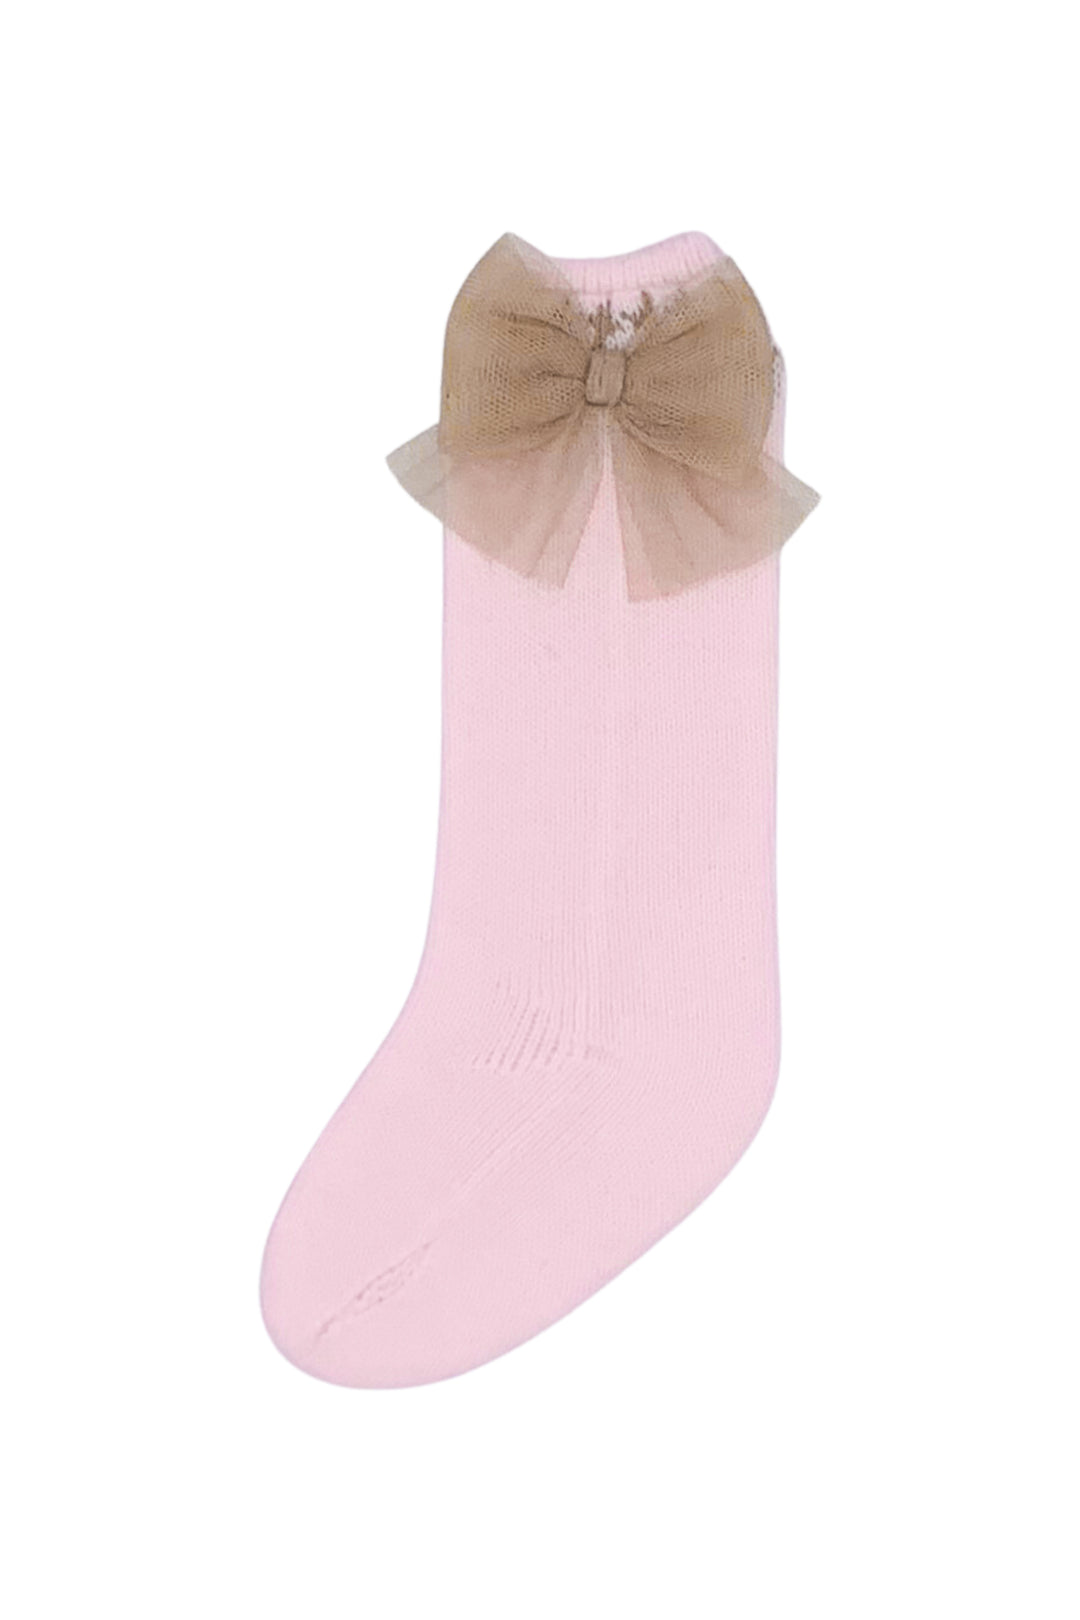 Rahigo Pink & Camel Knee High Tulle Bow Socks | Millie and John